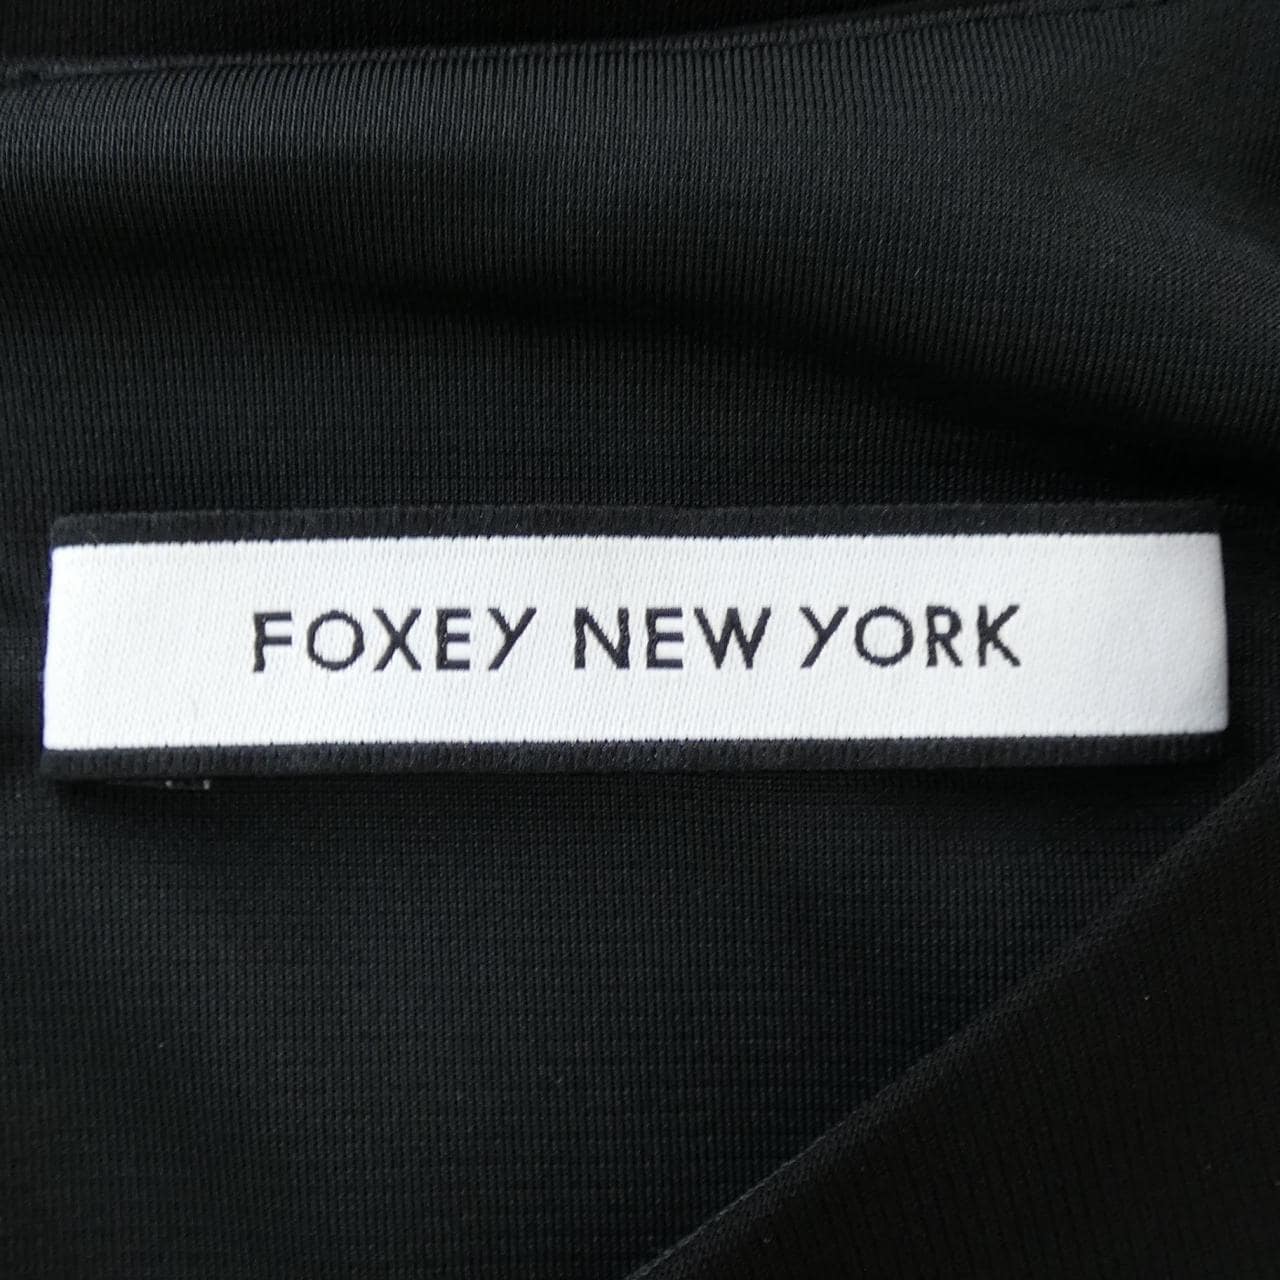 FOXY纽约FOXEY NEW YORK连体衣